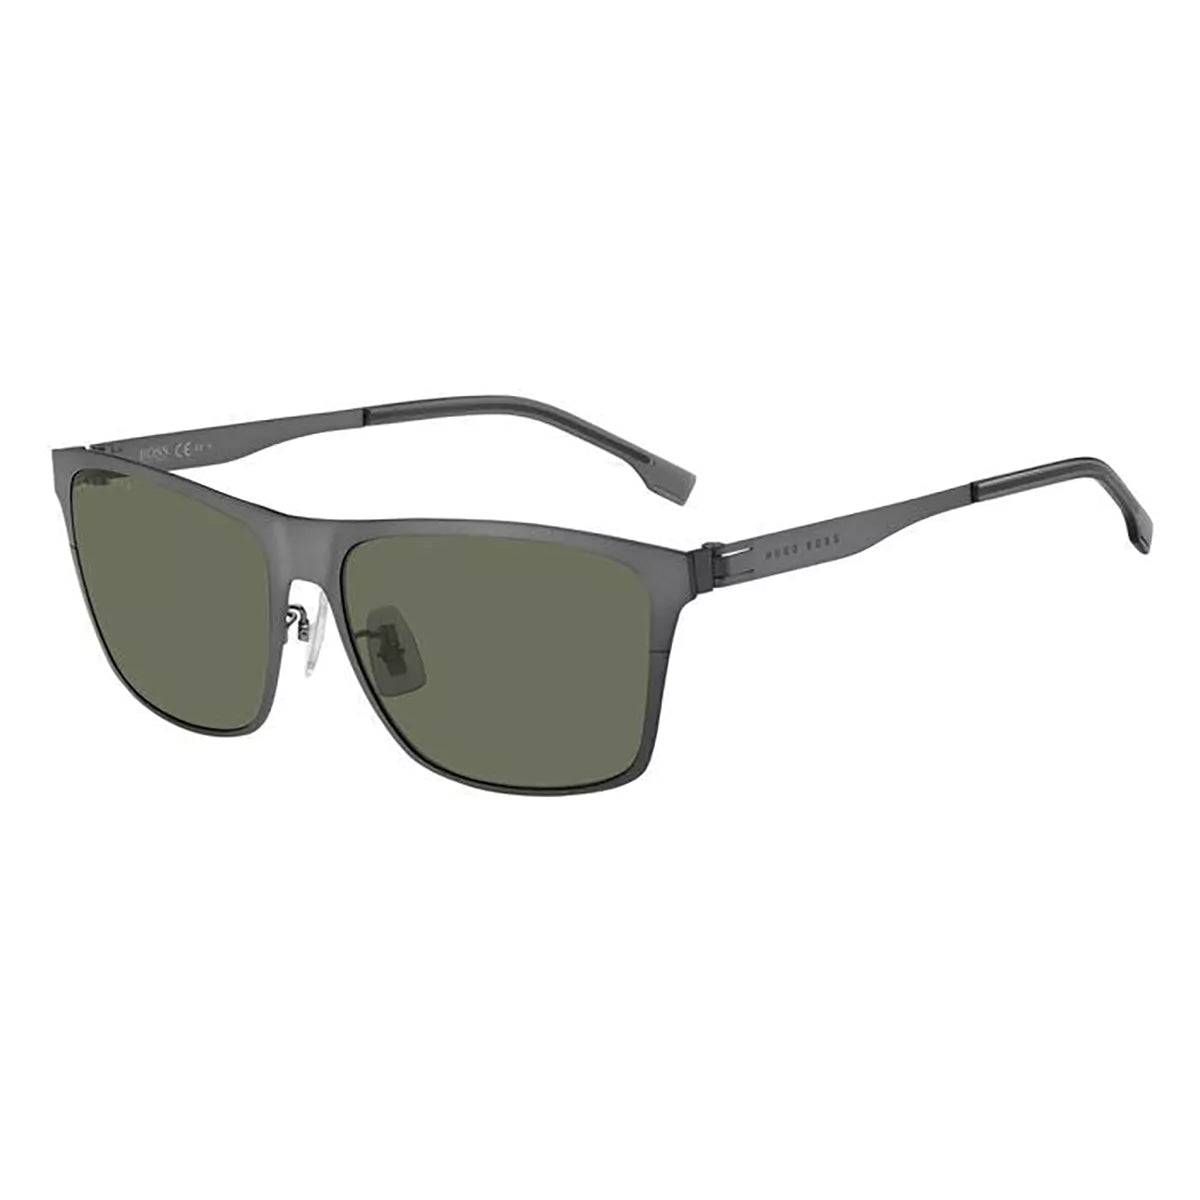 Boss by BOSS Men's Sunglasses Classic Square Ruthenium/Green 1410/F/S R80/QT